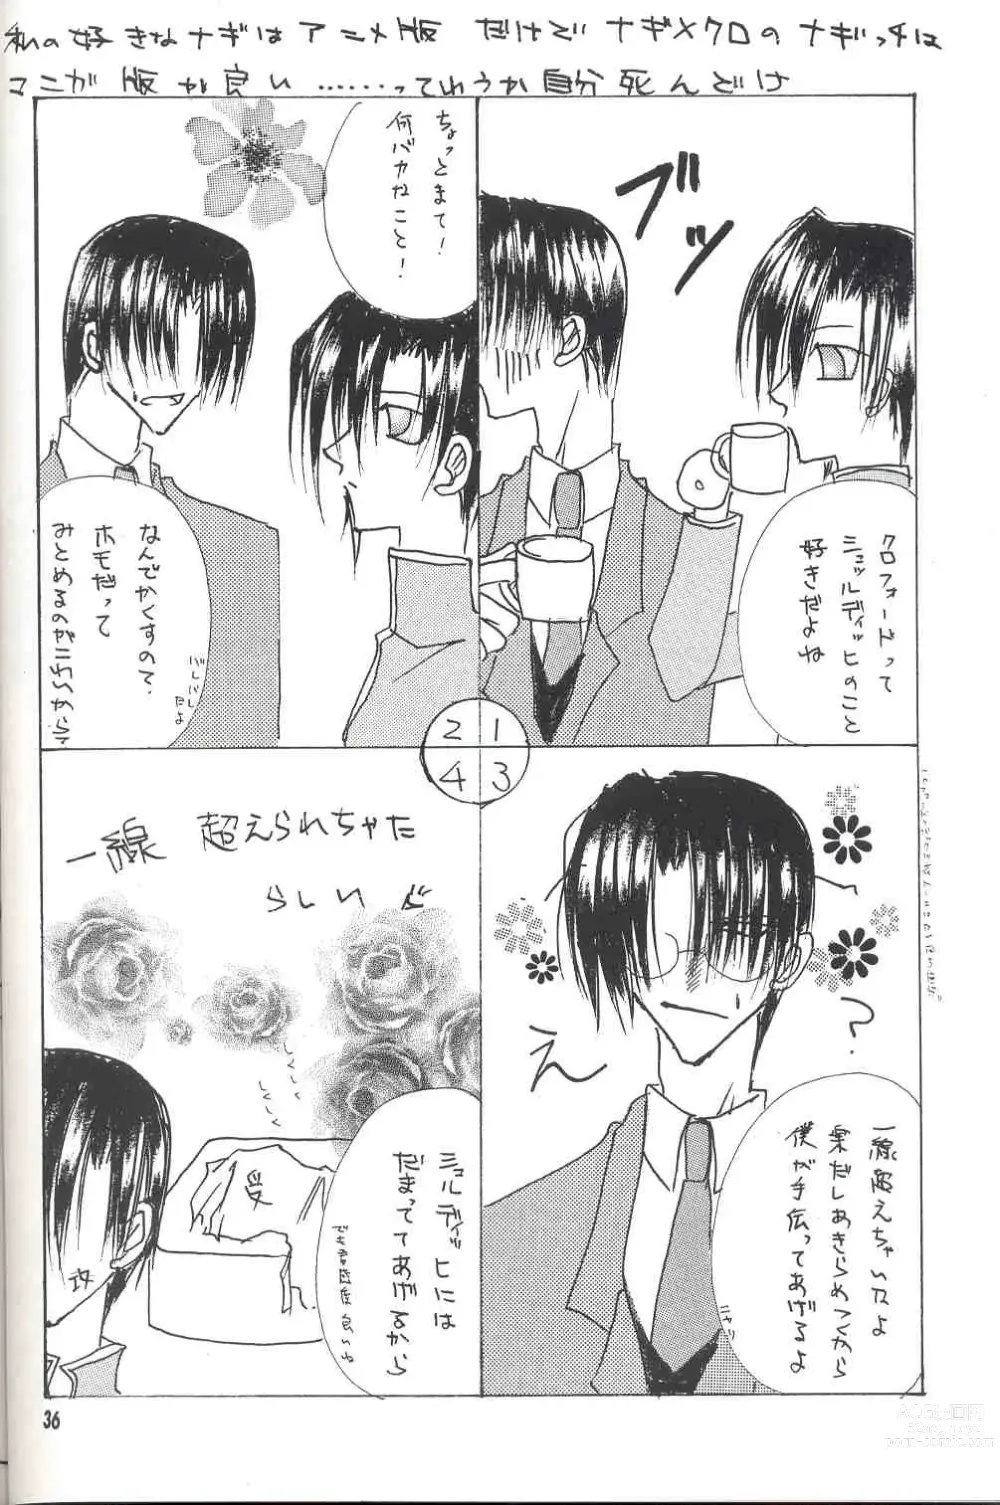 Page 35 of doujinshi Sentimental